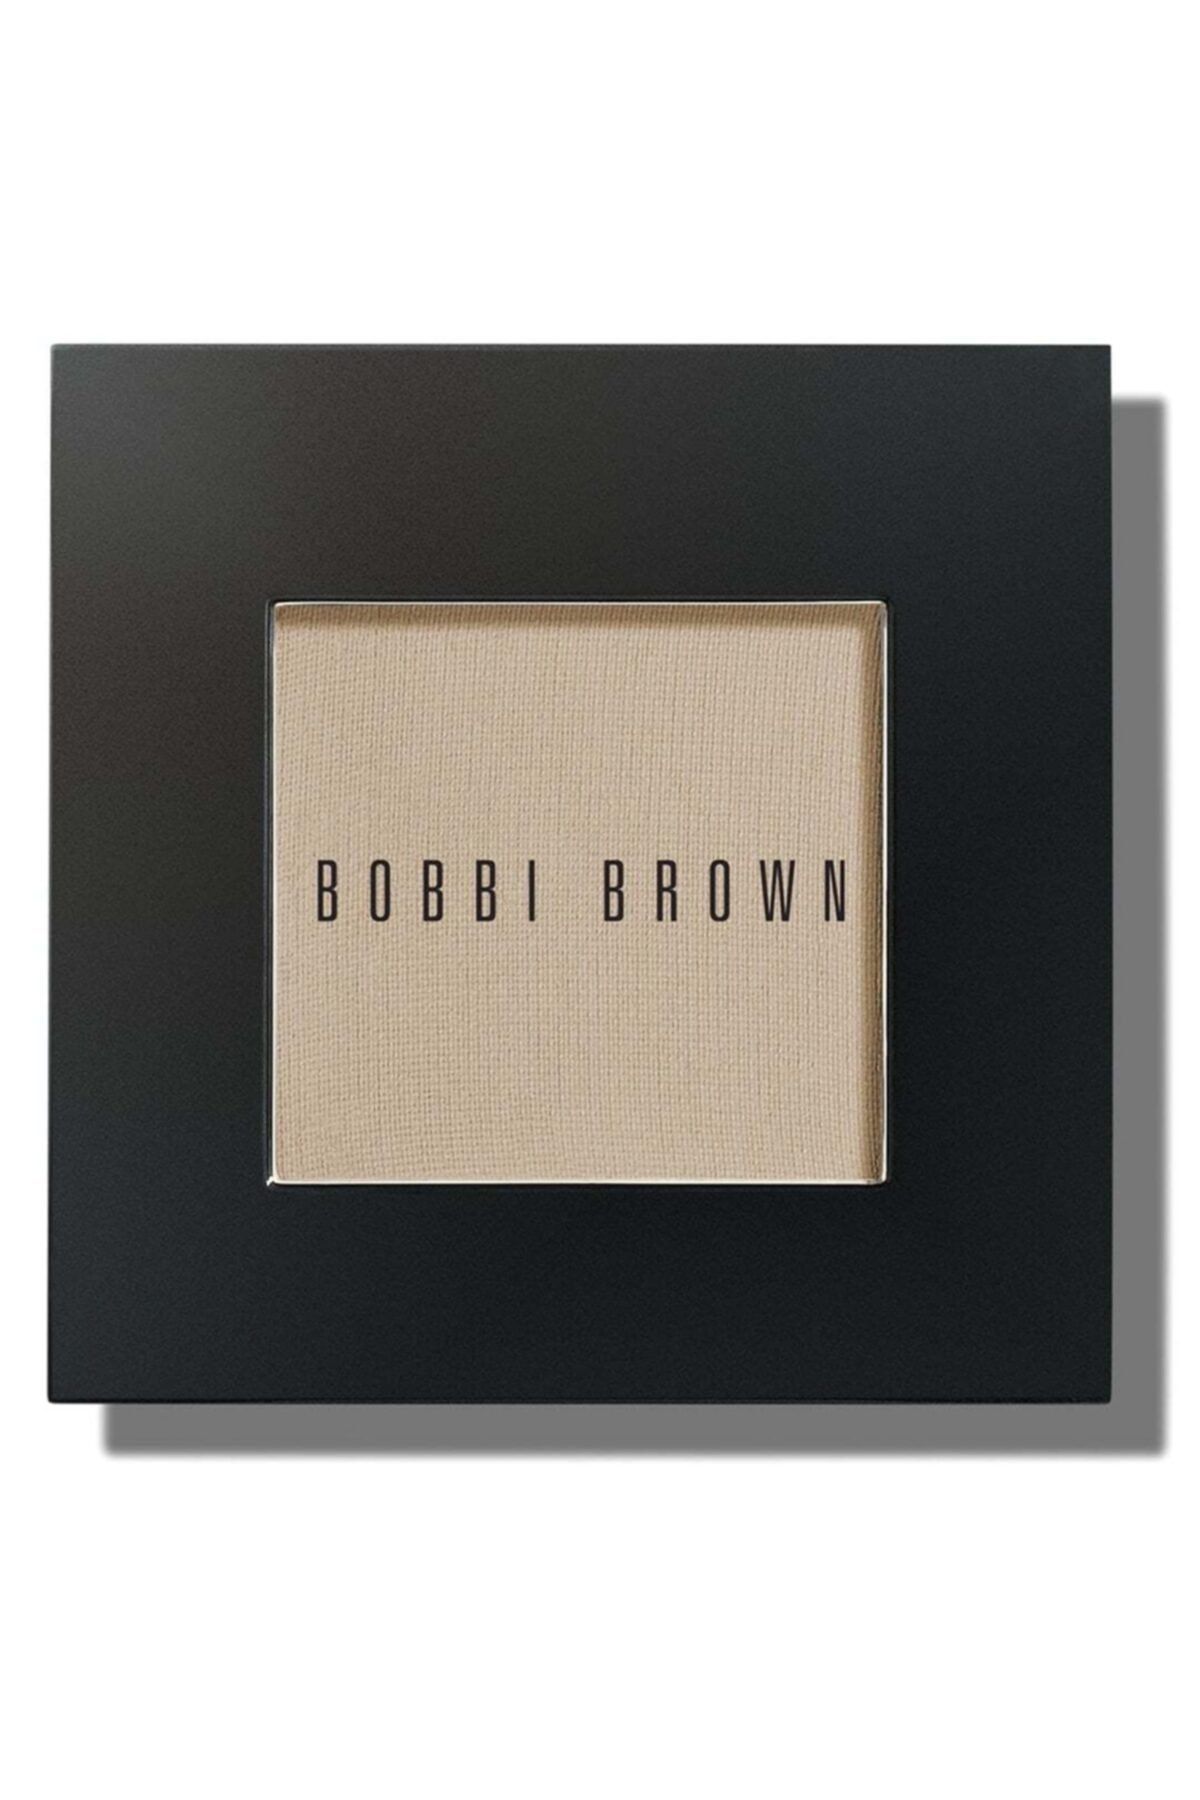 Bobbi Brown Mat Tekli Göz Farı - Bone 716170058511